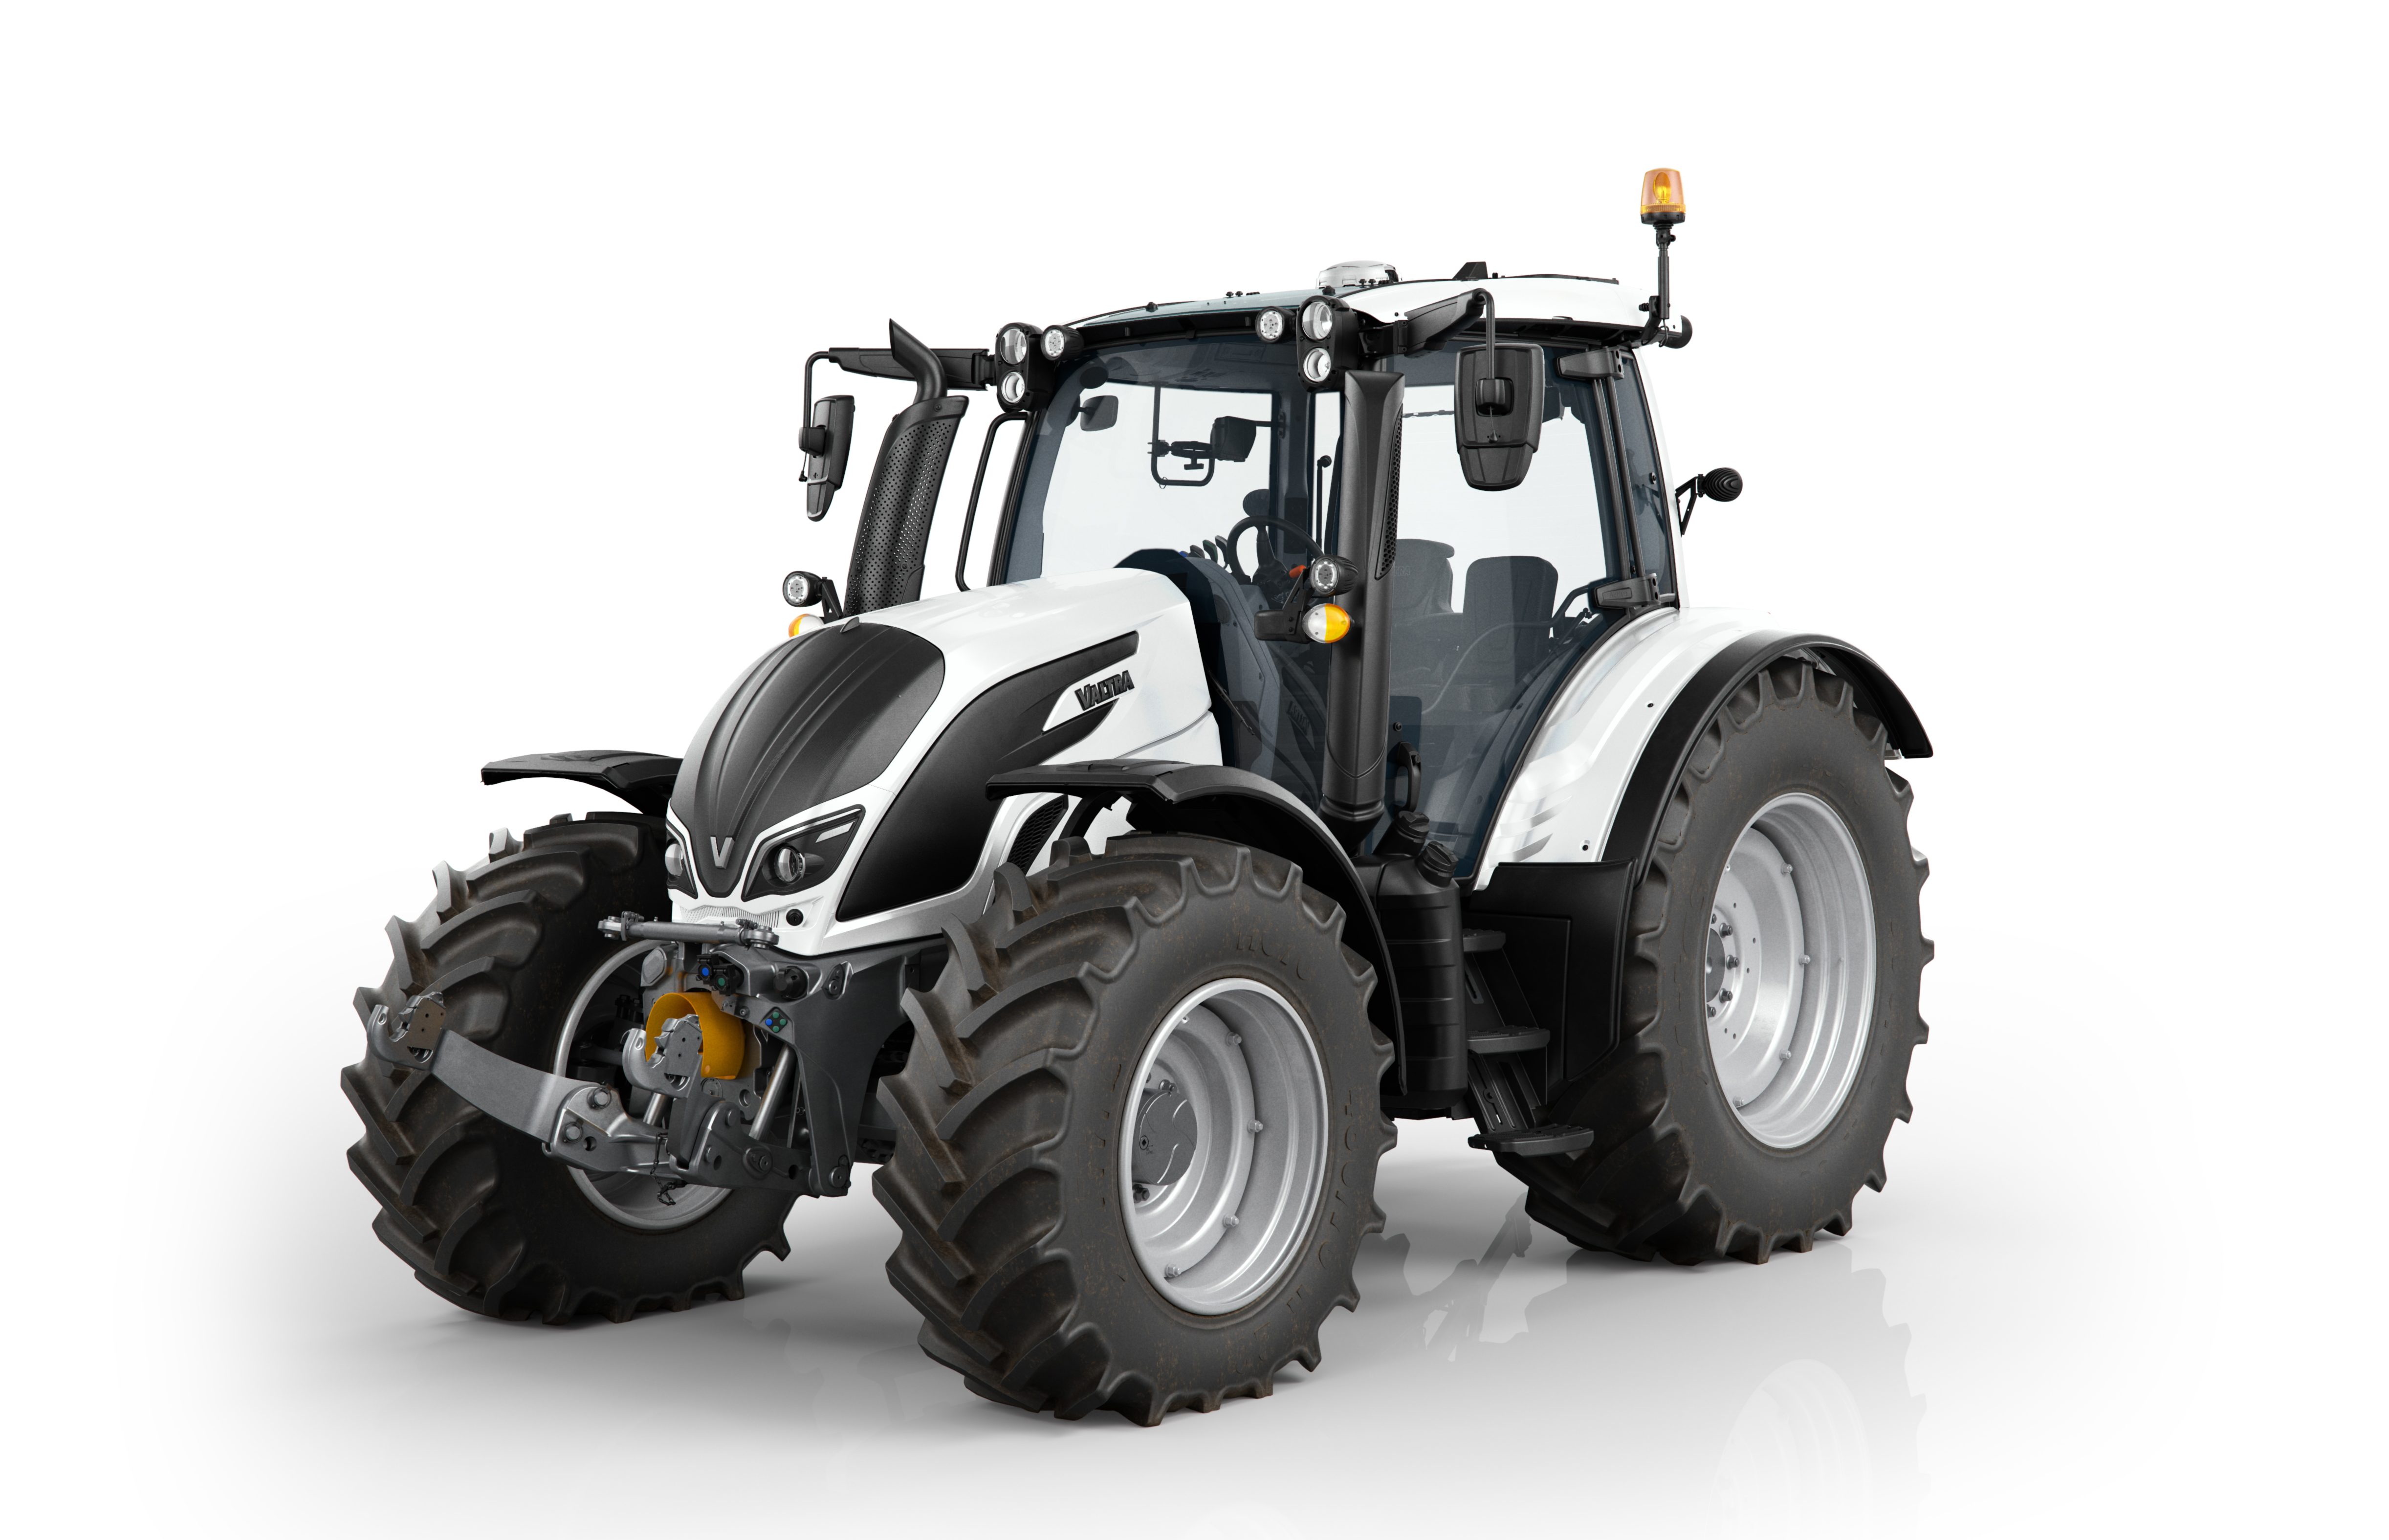 Hochwertige Tuning Fil Valtra Tractor T 132 6-6600 CR Sisu Direct 145hp